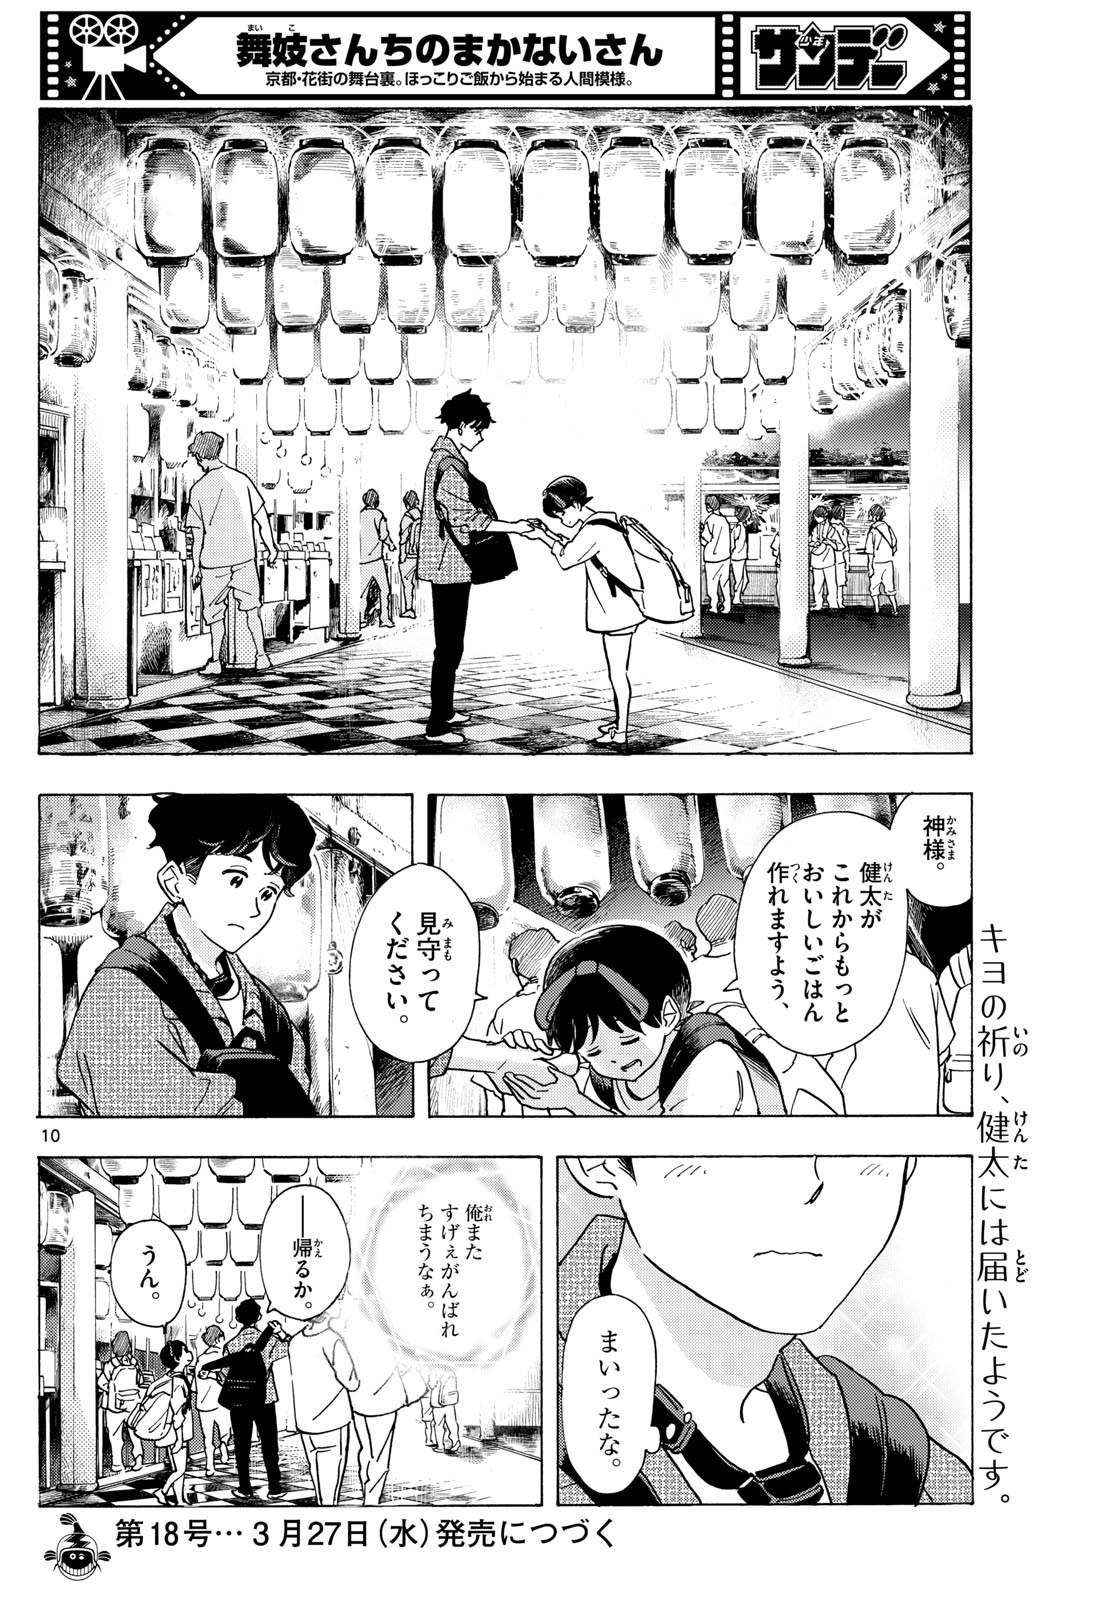 Maiko-san Chi no Makanai-san - Chapter 297 - Page 10